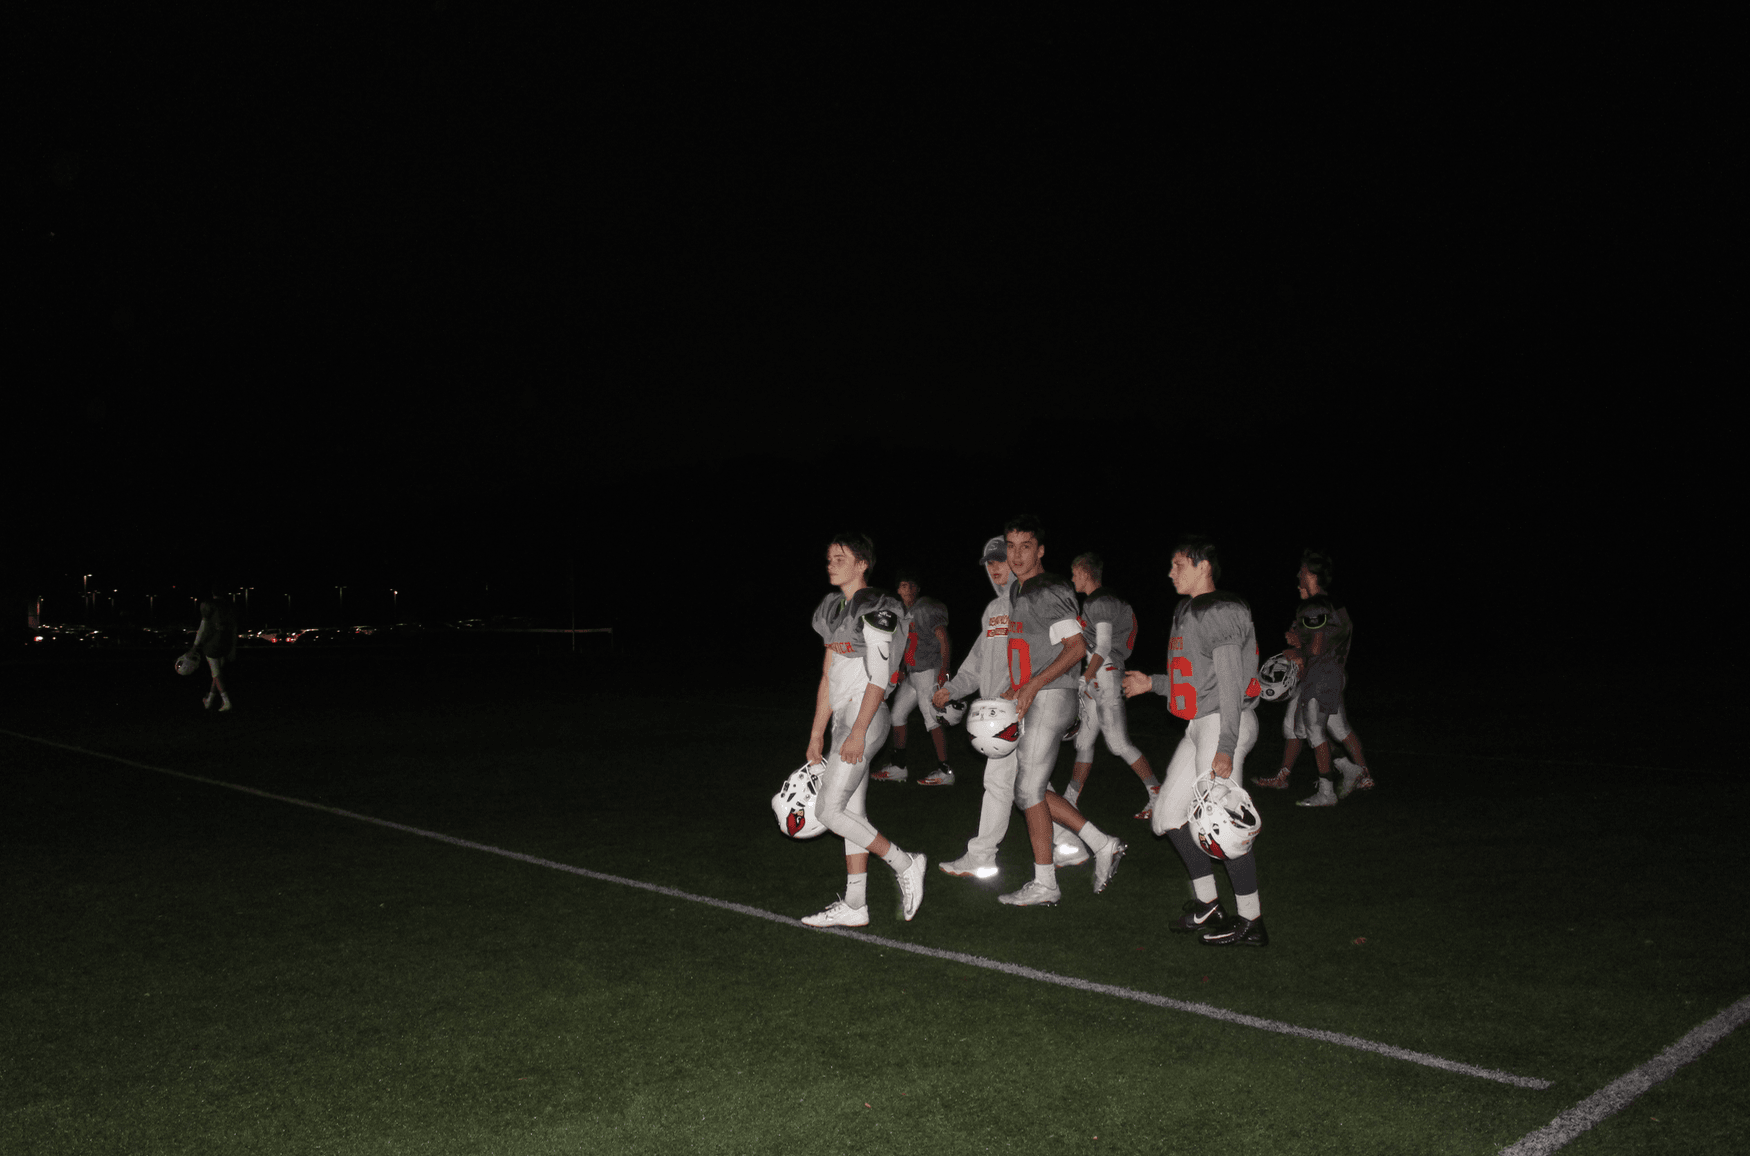 Camera flash illuminates field as JV football players walk back toward GHS following game on field 7 against Ridgefield. Nov 6, 2017 Photo: Leslie Yager